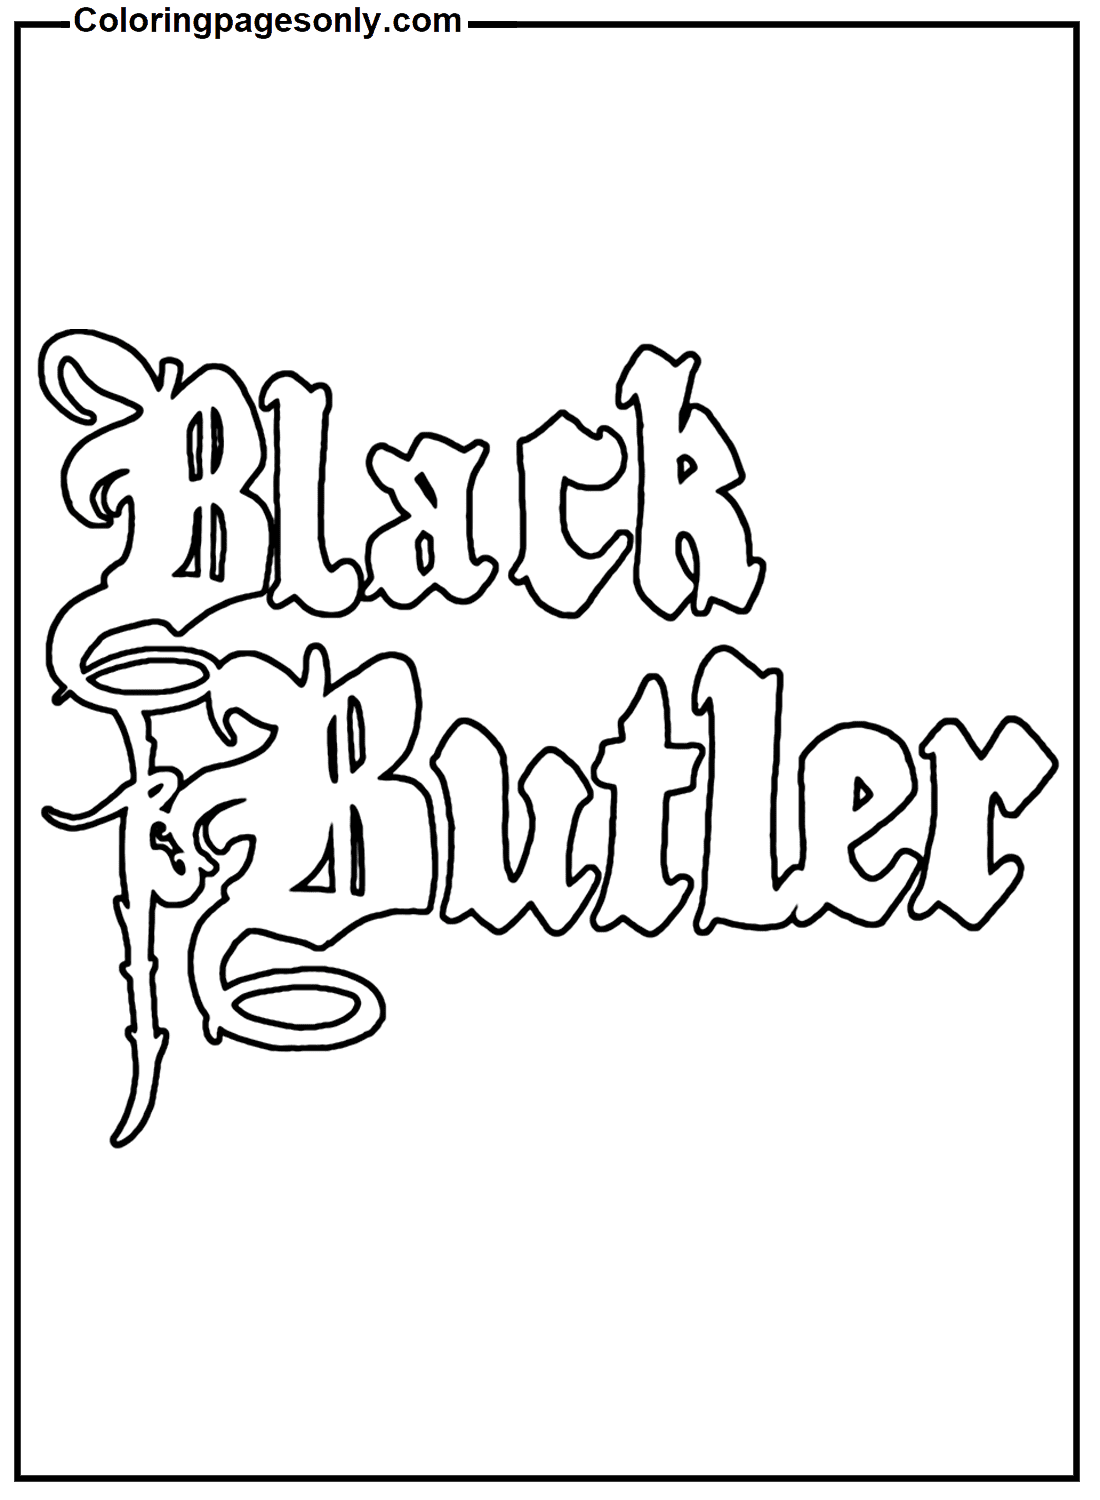 Логотип Black Butler из Black Butler